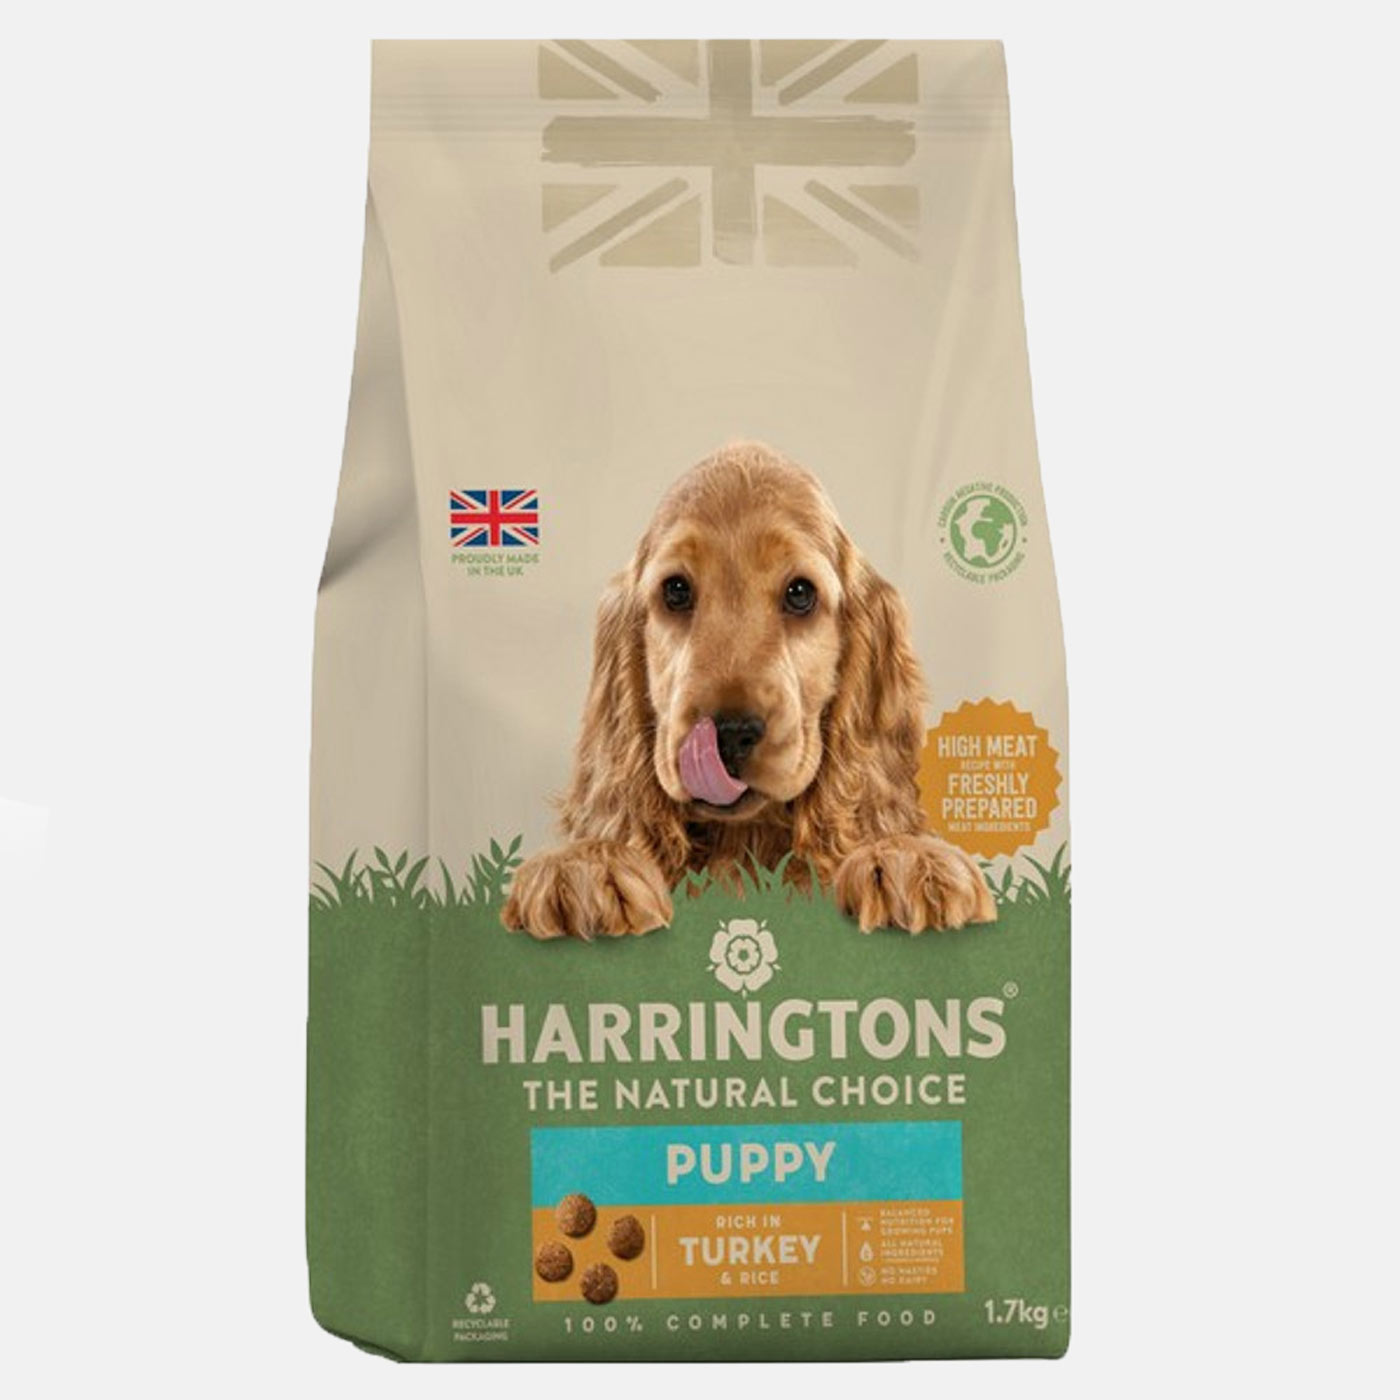 Harringtons Puppy Dry Dog Food with Turkey & Rice